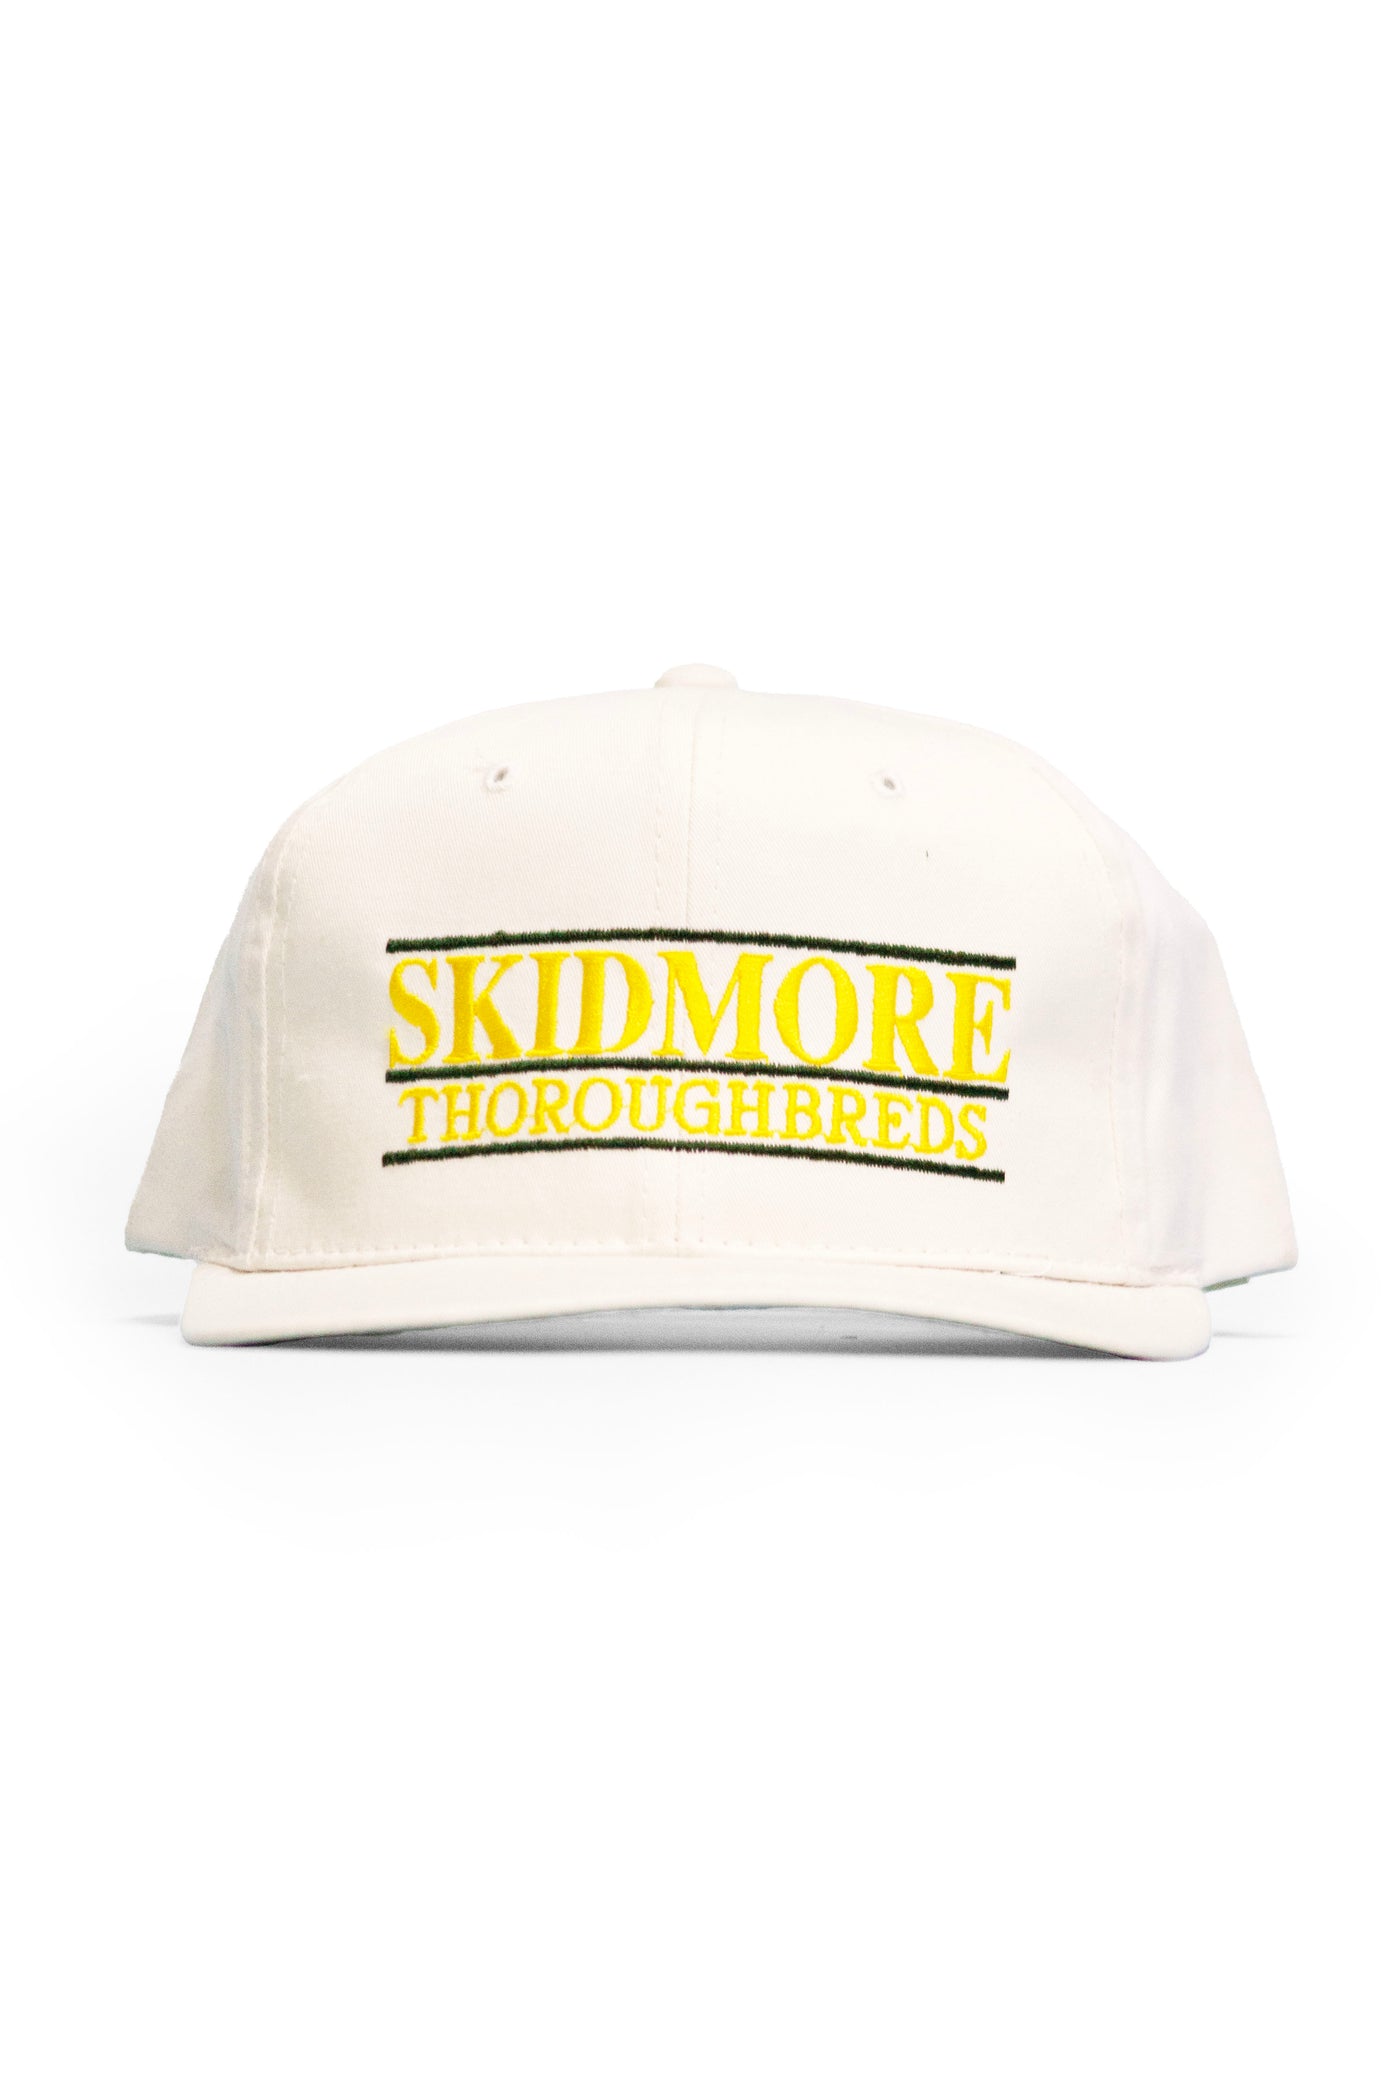 Vintage Skidmore Thoroughbreds Snapback